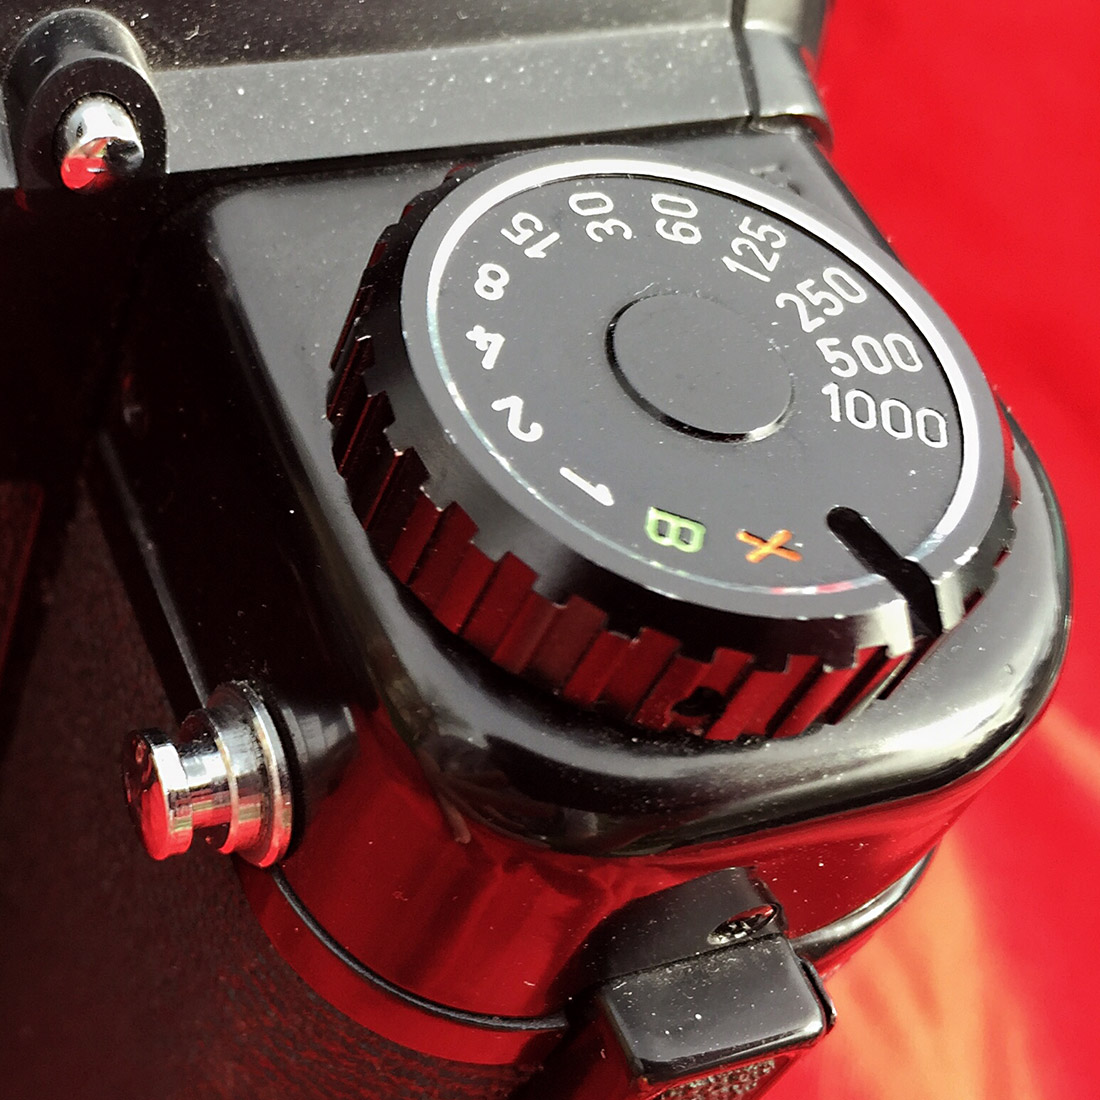 P67 shutter speed selector knob